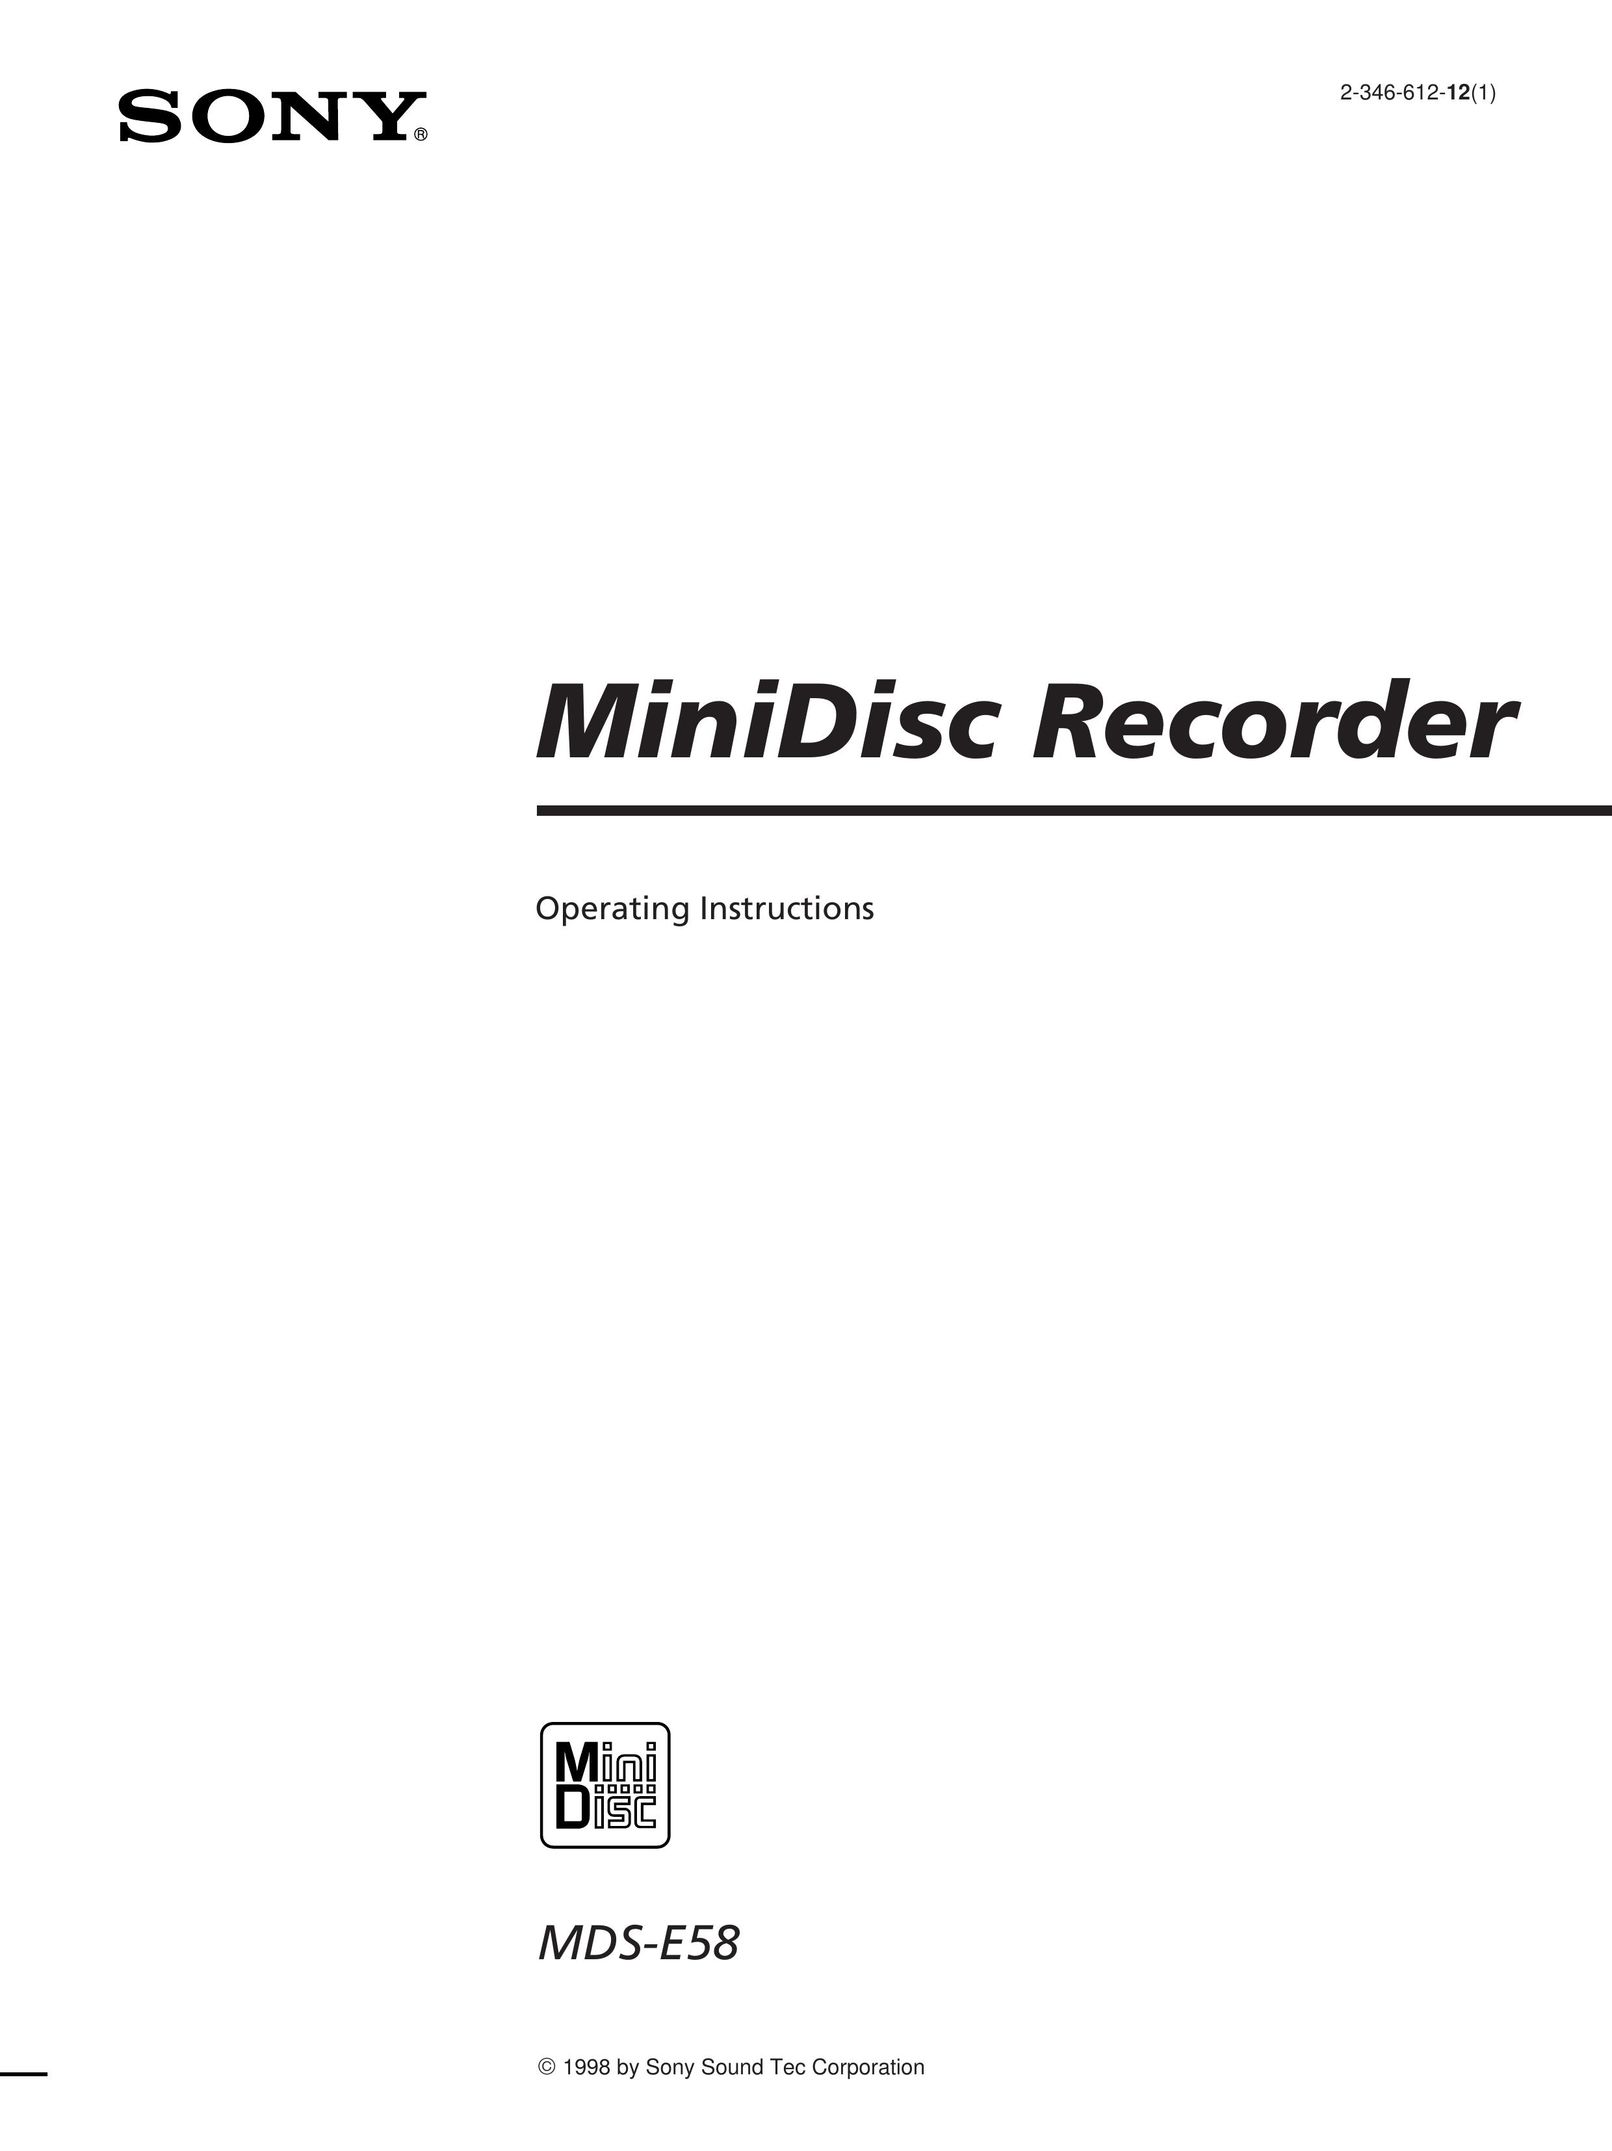 Sony MDS-E58 MiniDisc Player User Manual